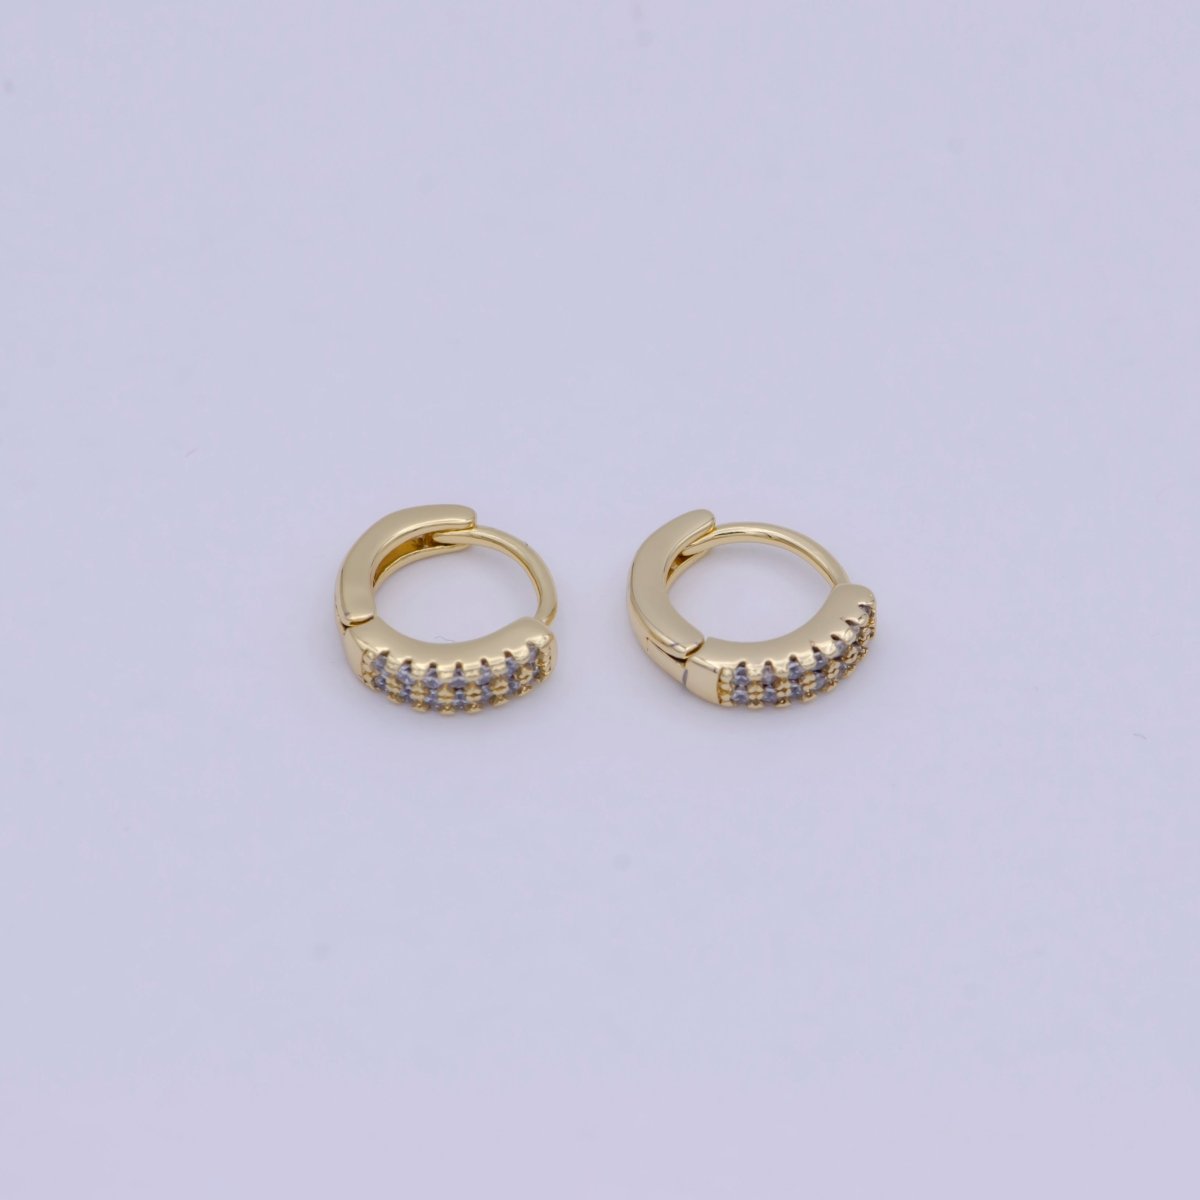 10mm Mini Hoop Earrings • 14k Gold Filled Tiny Earrings • Huggie Hoops Earrings • Minimalist Earrings Wholesale Jewelry T-306 - DLUXCA